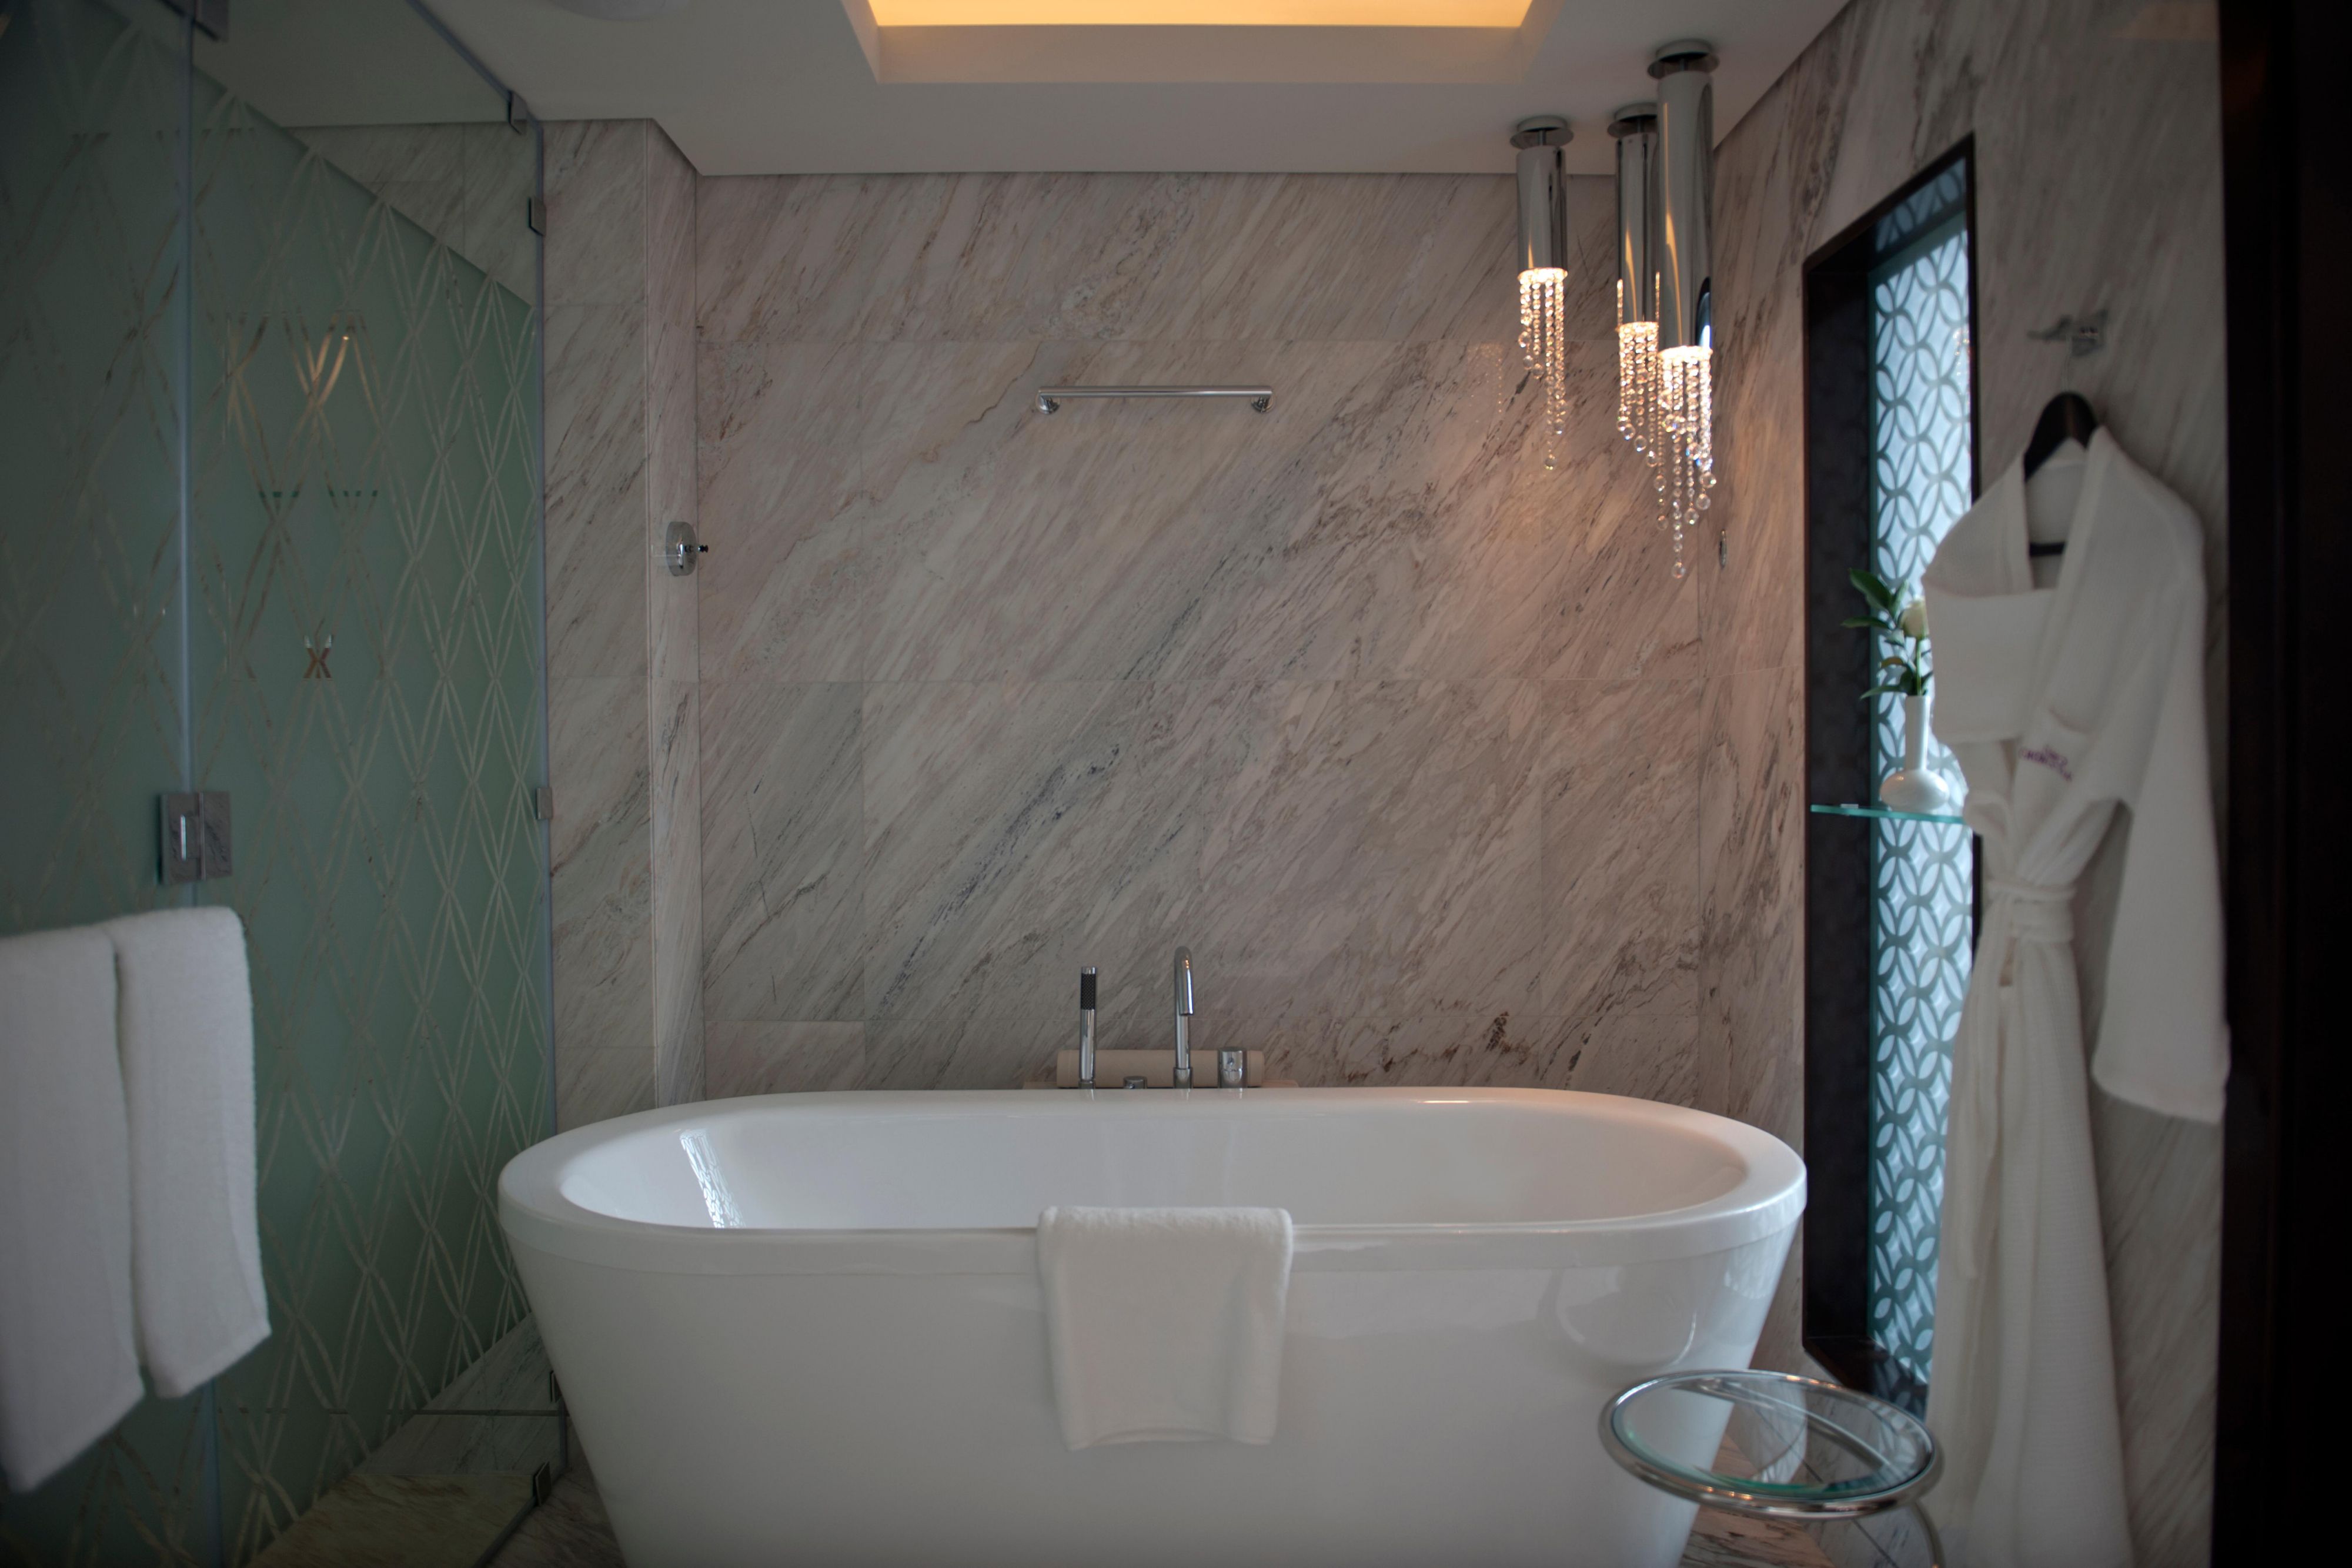 Crowne Paza Dubai-Deira -5 star hotel- PRESIDENTIAL SUITE BATHROOM